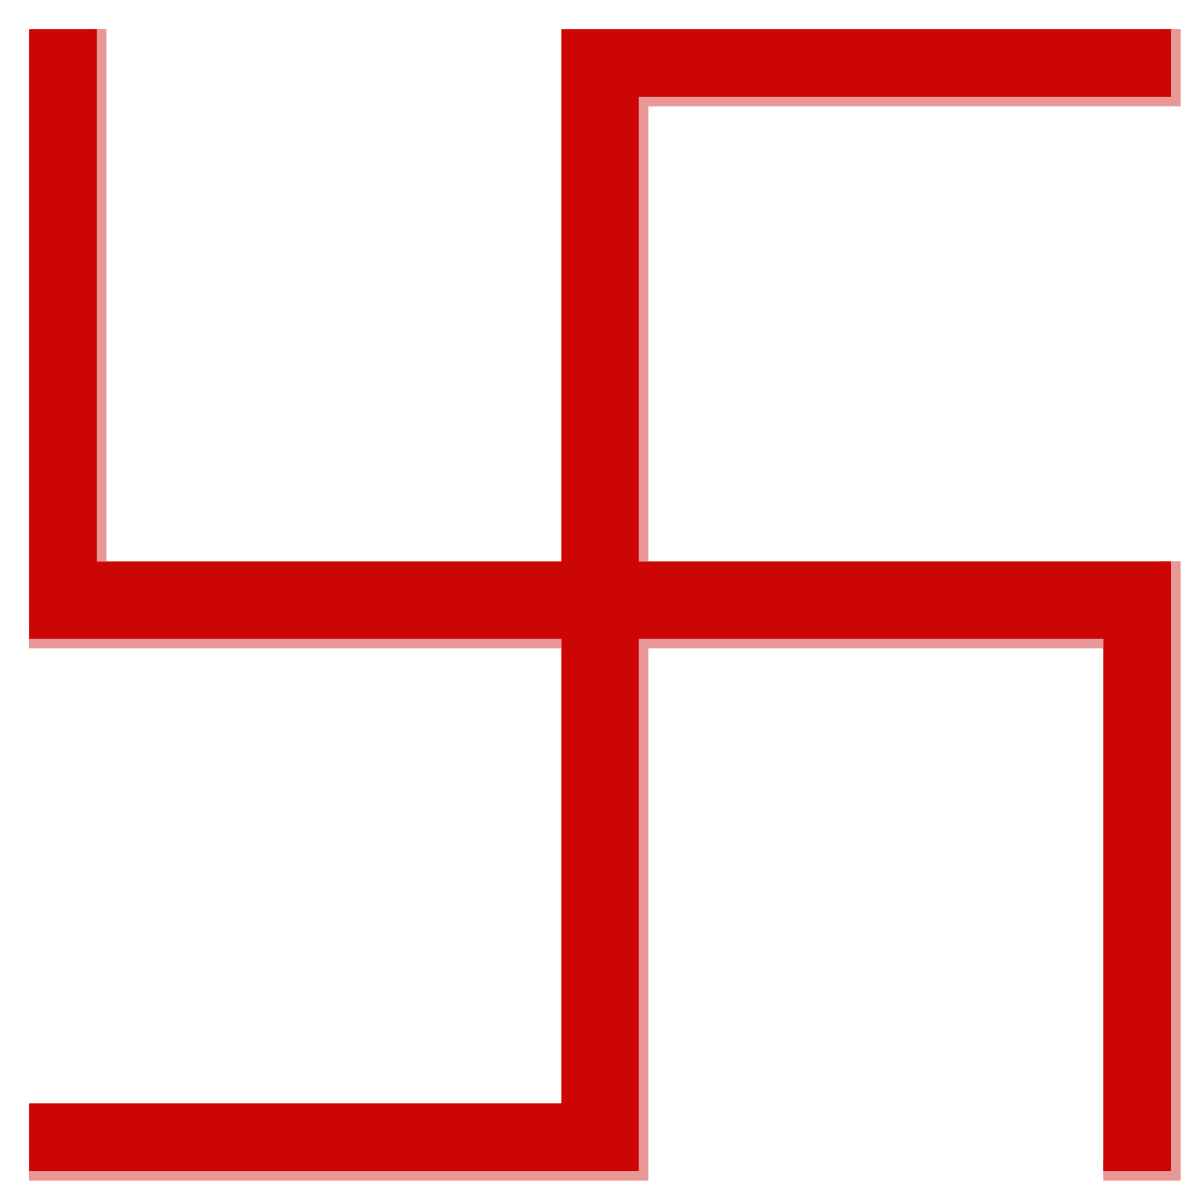 Знак похожий на свастику. Буддийский знак похожий на свастику. Фашистский крест.